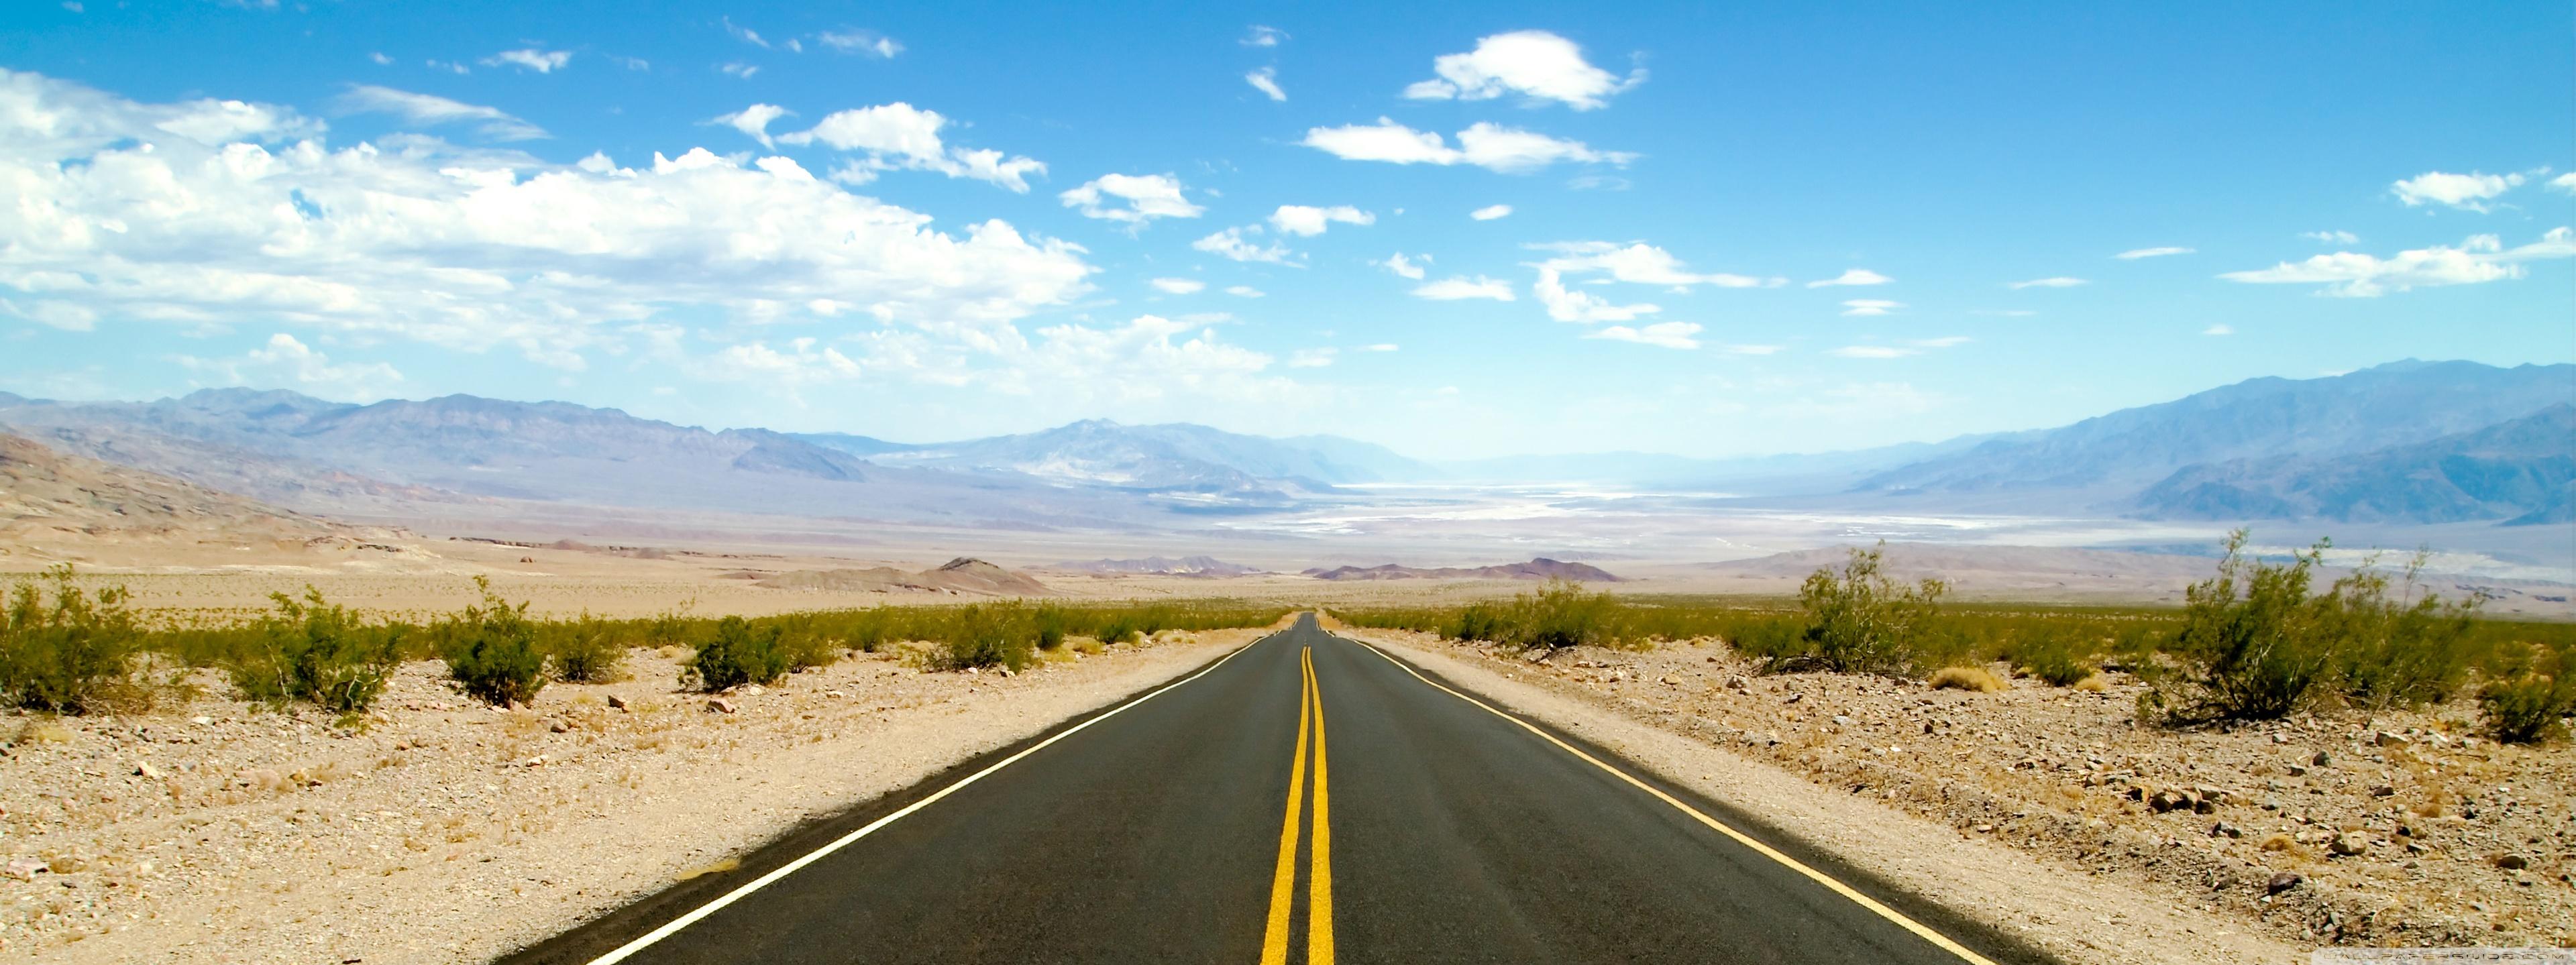 Road To Death Valley Ultra HD Desktop Background Wallpaper For 4k